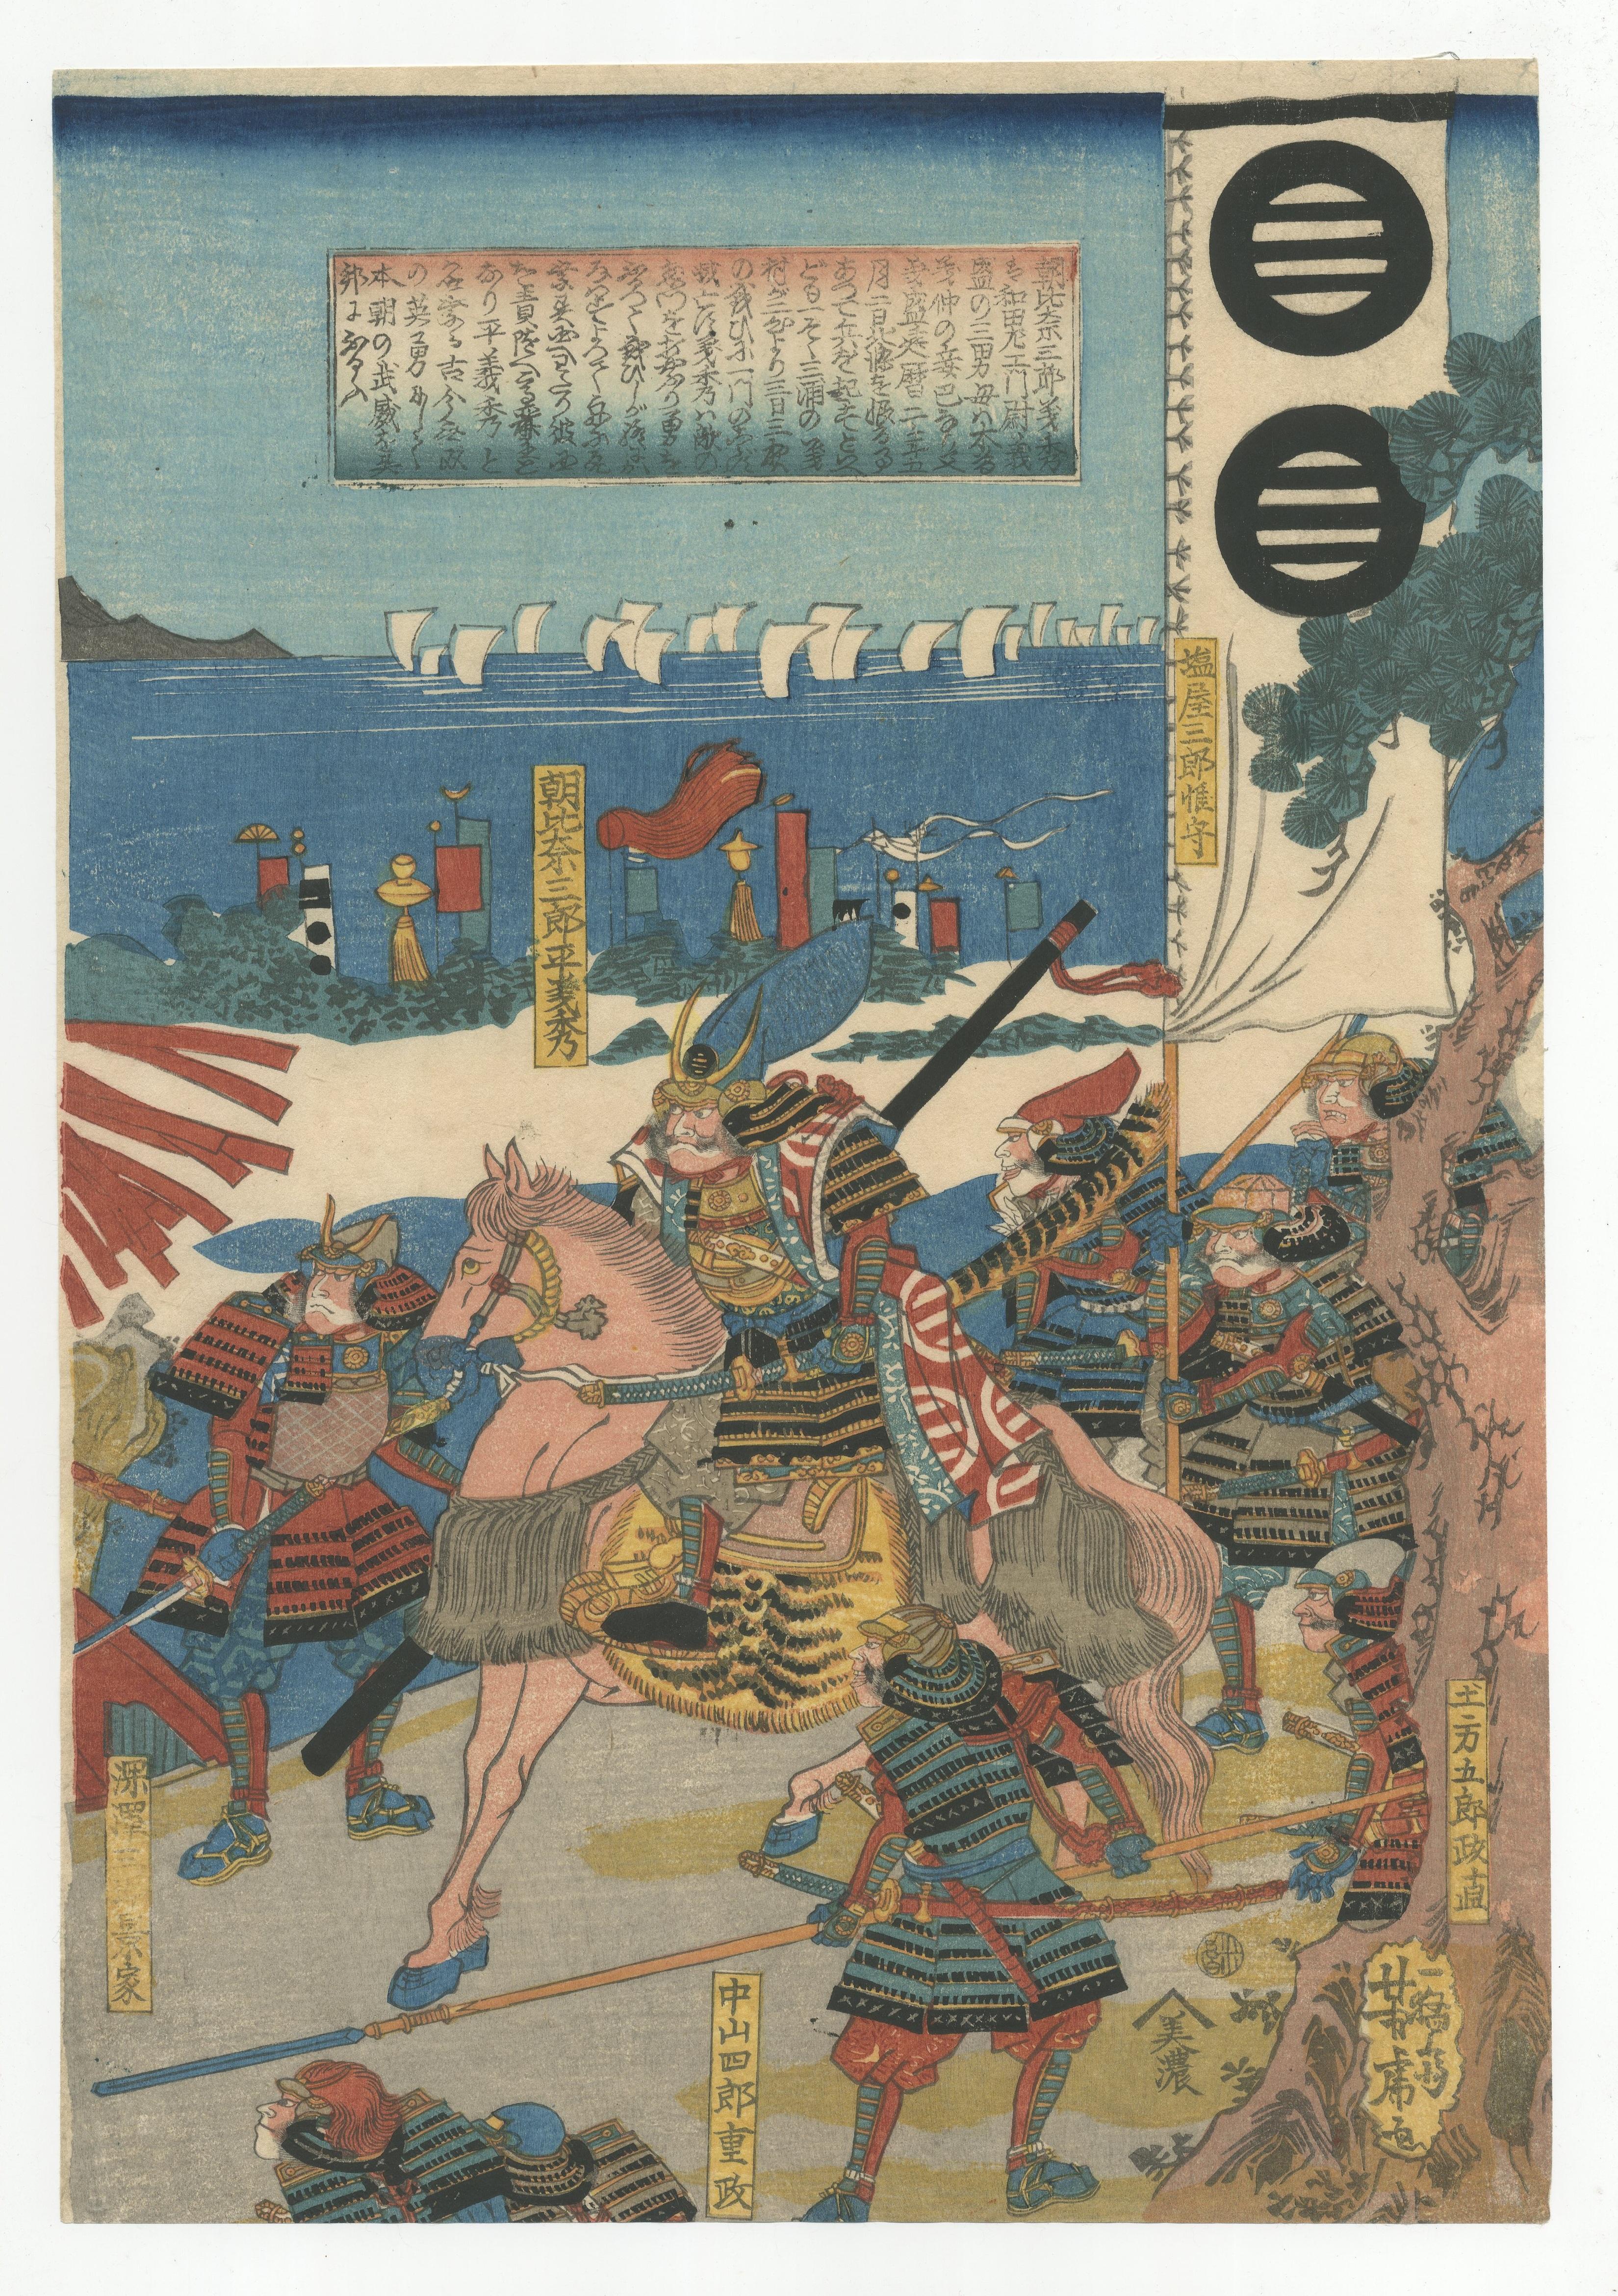 Artist: Yoshifusa Utagawa (active c.1837-1860)
Title: Lord Asahina Yoshihide Leading his Army
Publisher: Minoya
Date: 1846
Dimensions: (L) 25 x 36.7 (C) 25.7 x 37.1 (R) 25.5 x 37.2 cm

Tales of Lord Asahia Yoshihide often slide between history and